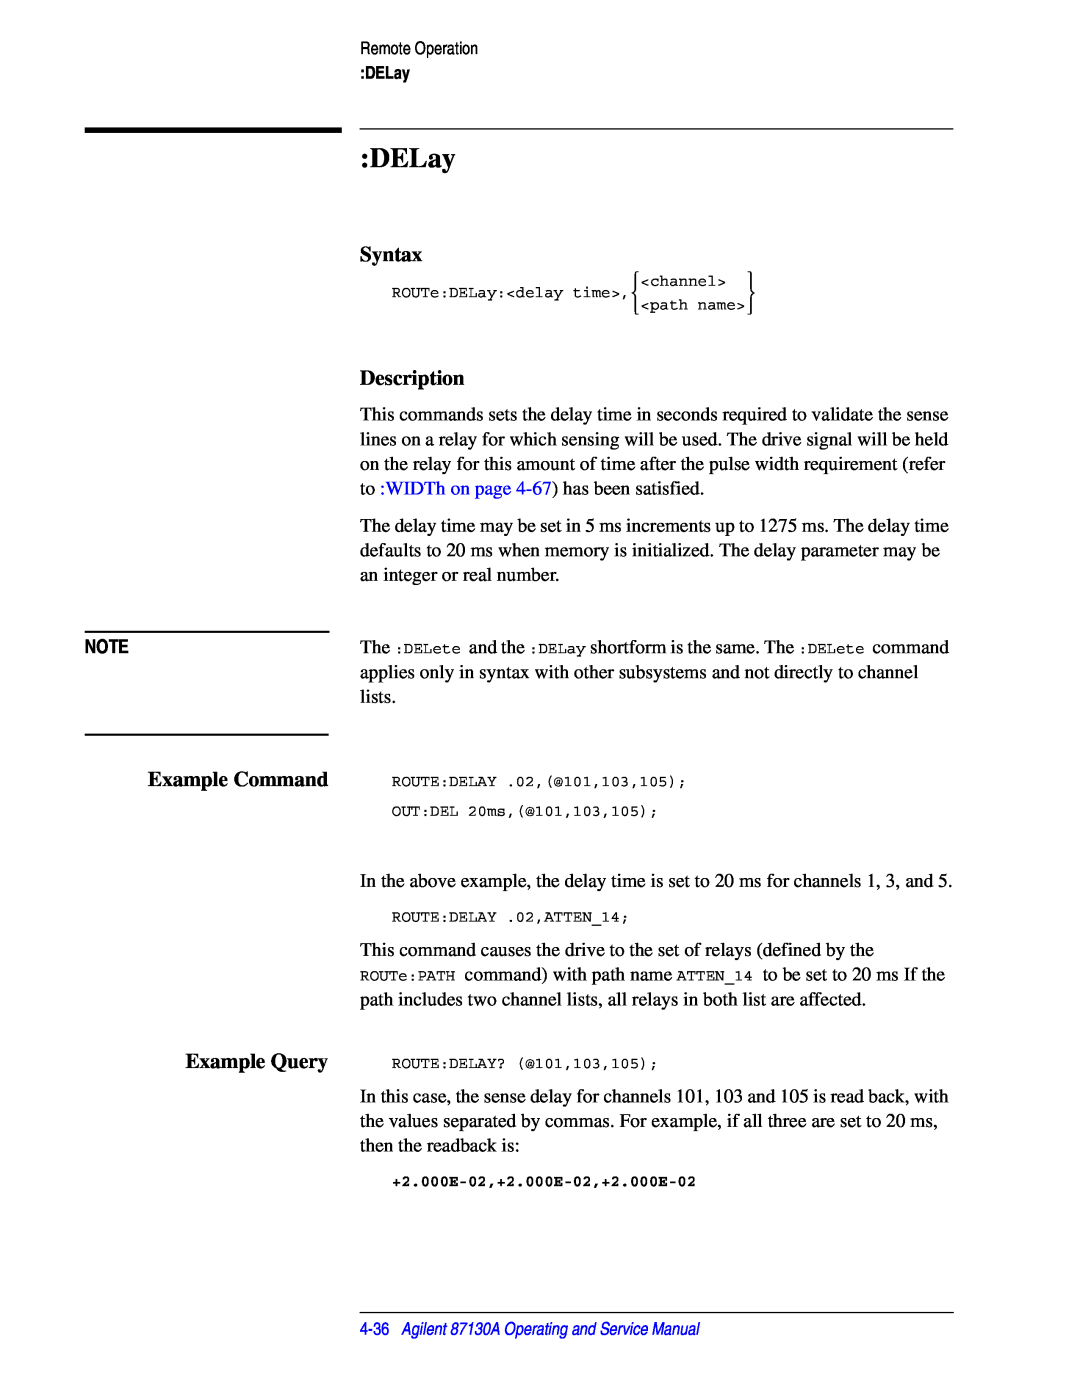 Agilent Technologies 87130A manual DELay, Syntax, Description, Example Command, Example Query 